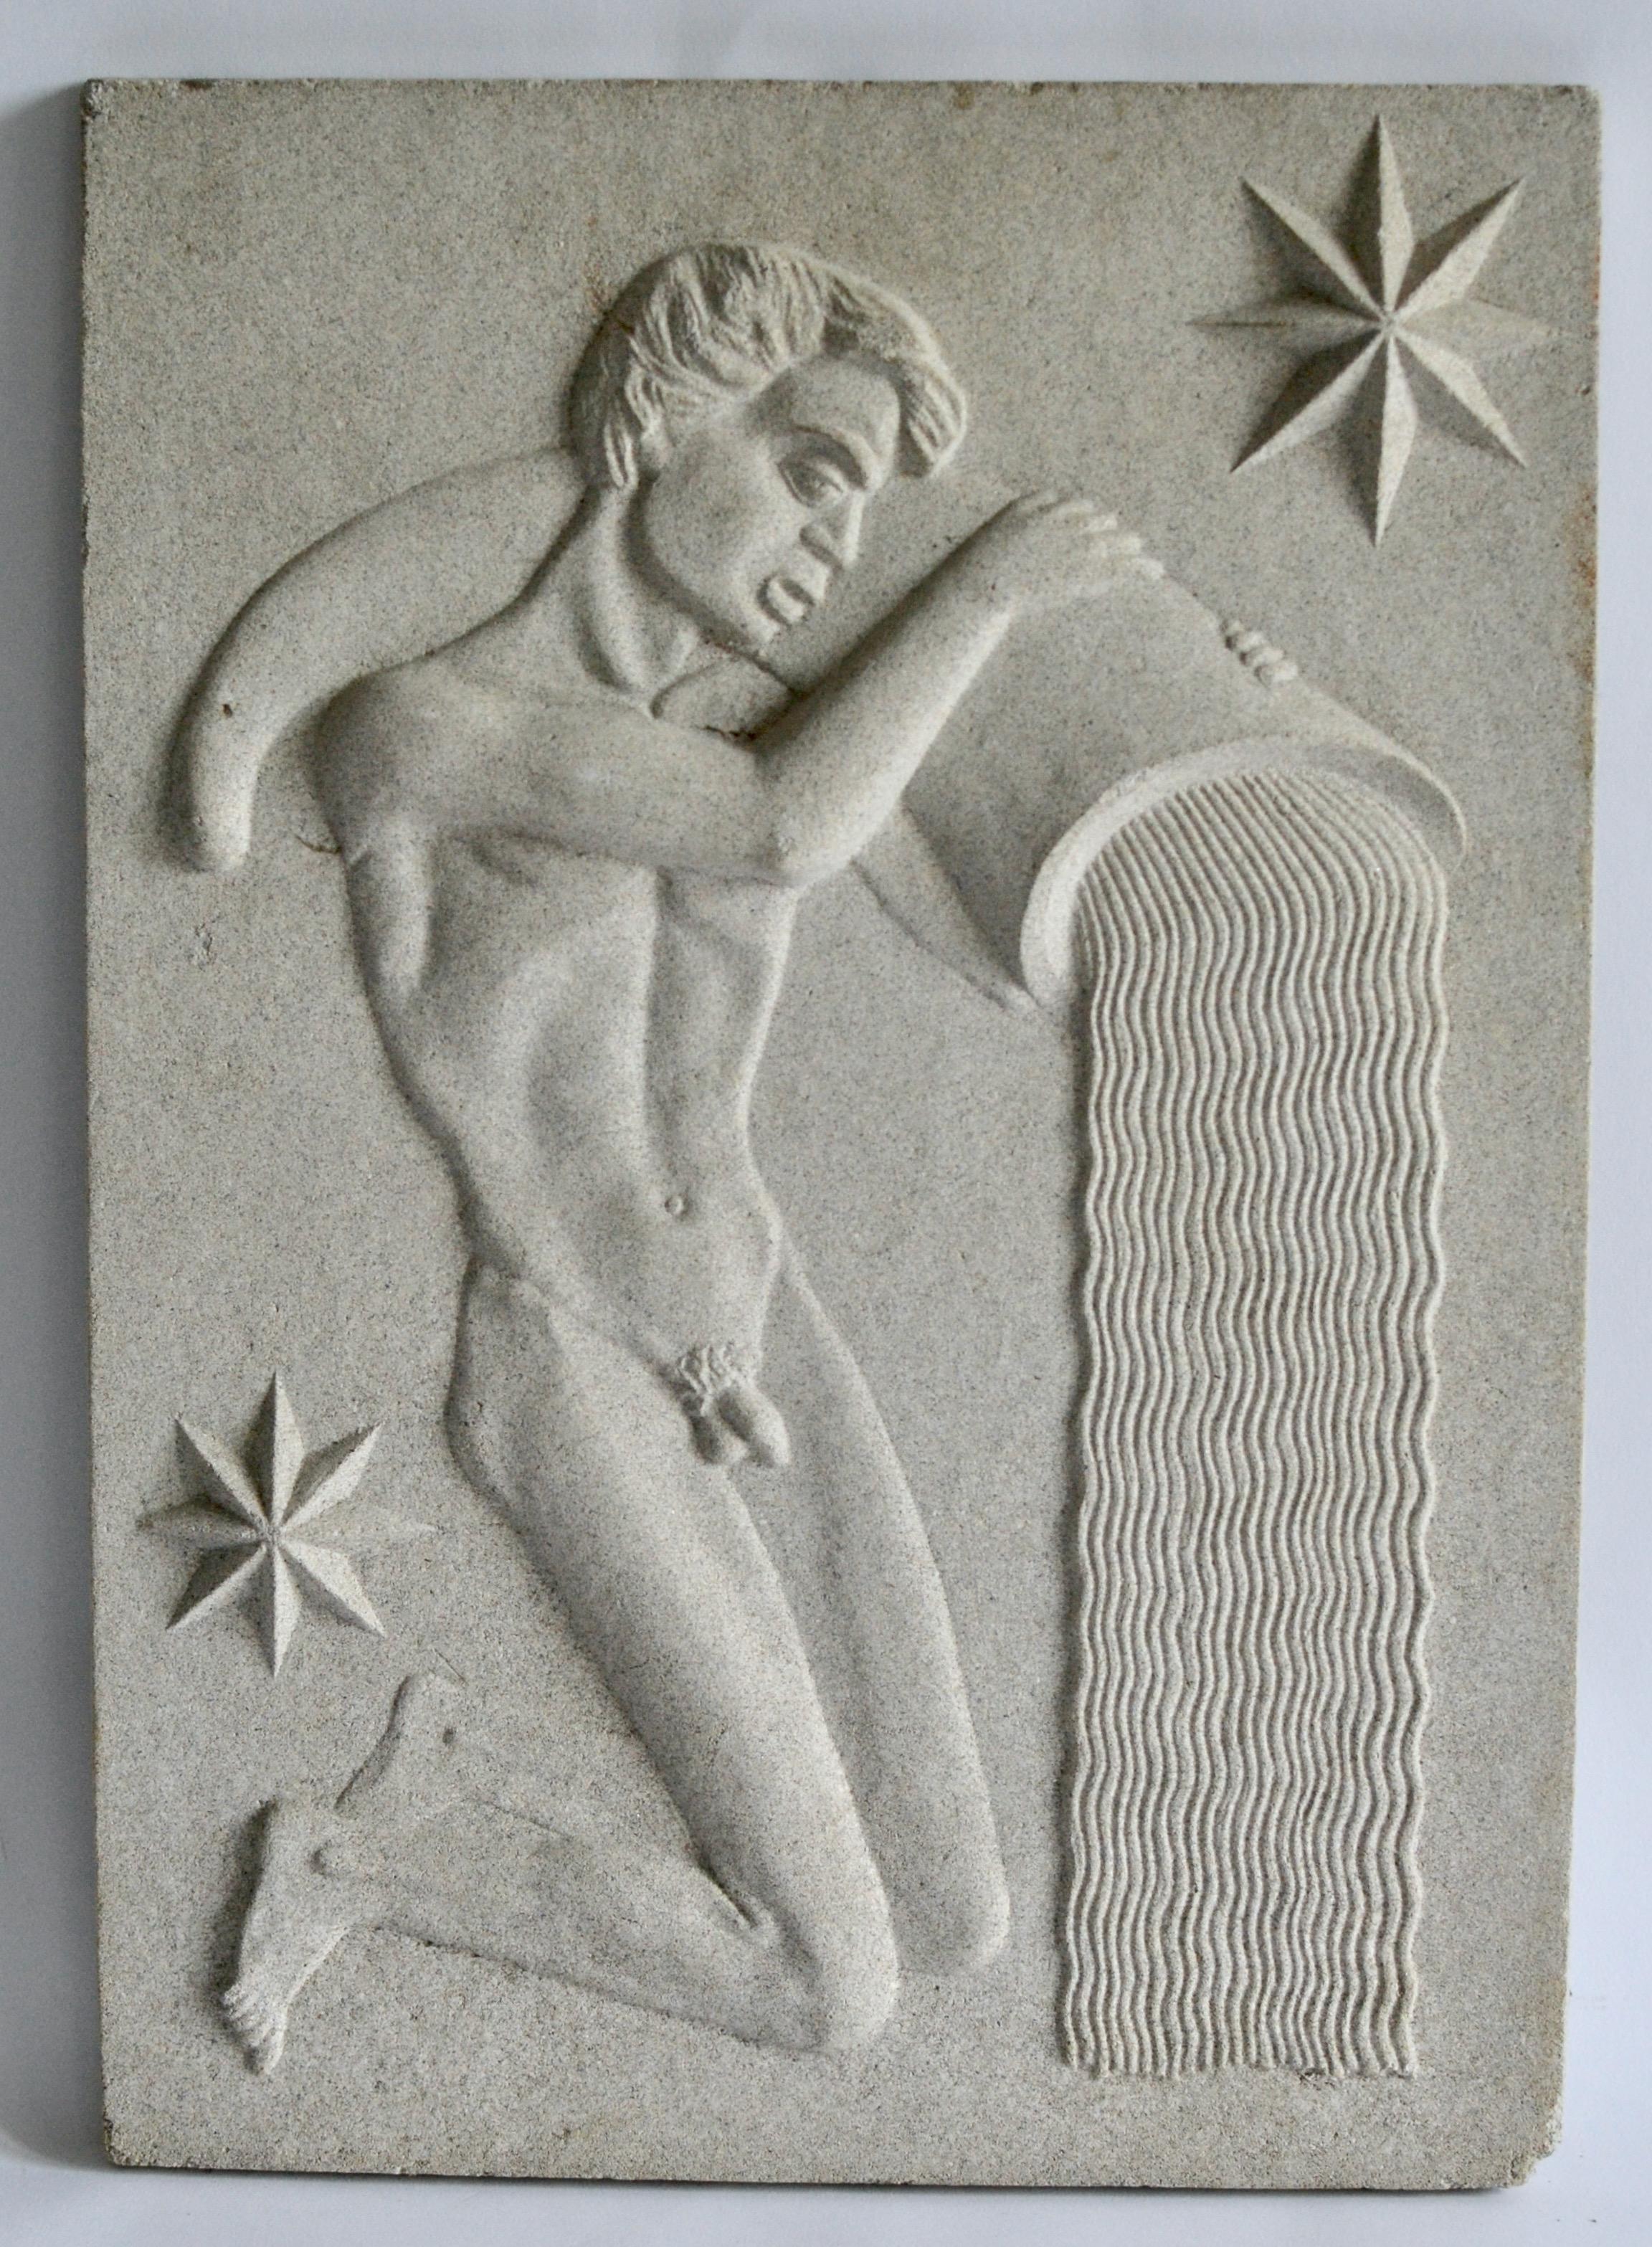 Swedish Zodiac Artificial Stone Relief Sign of Taurus, c. 1940